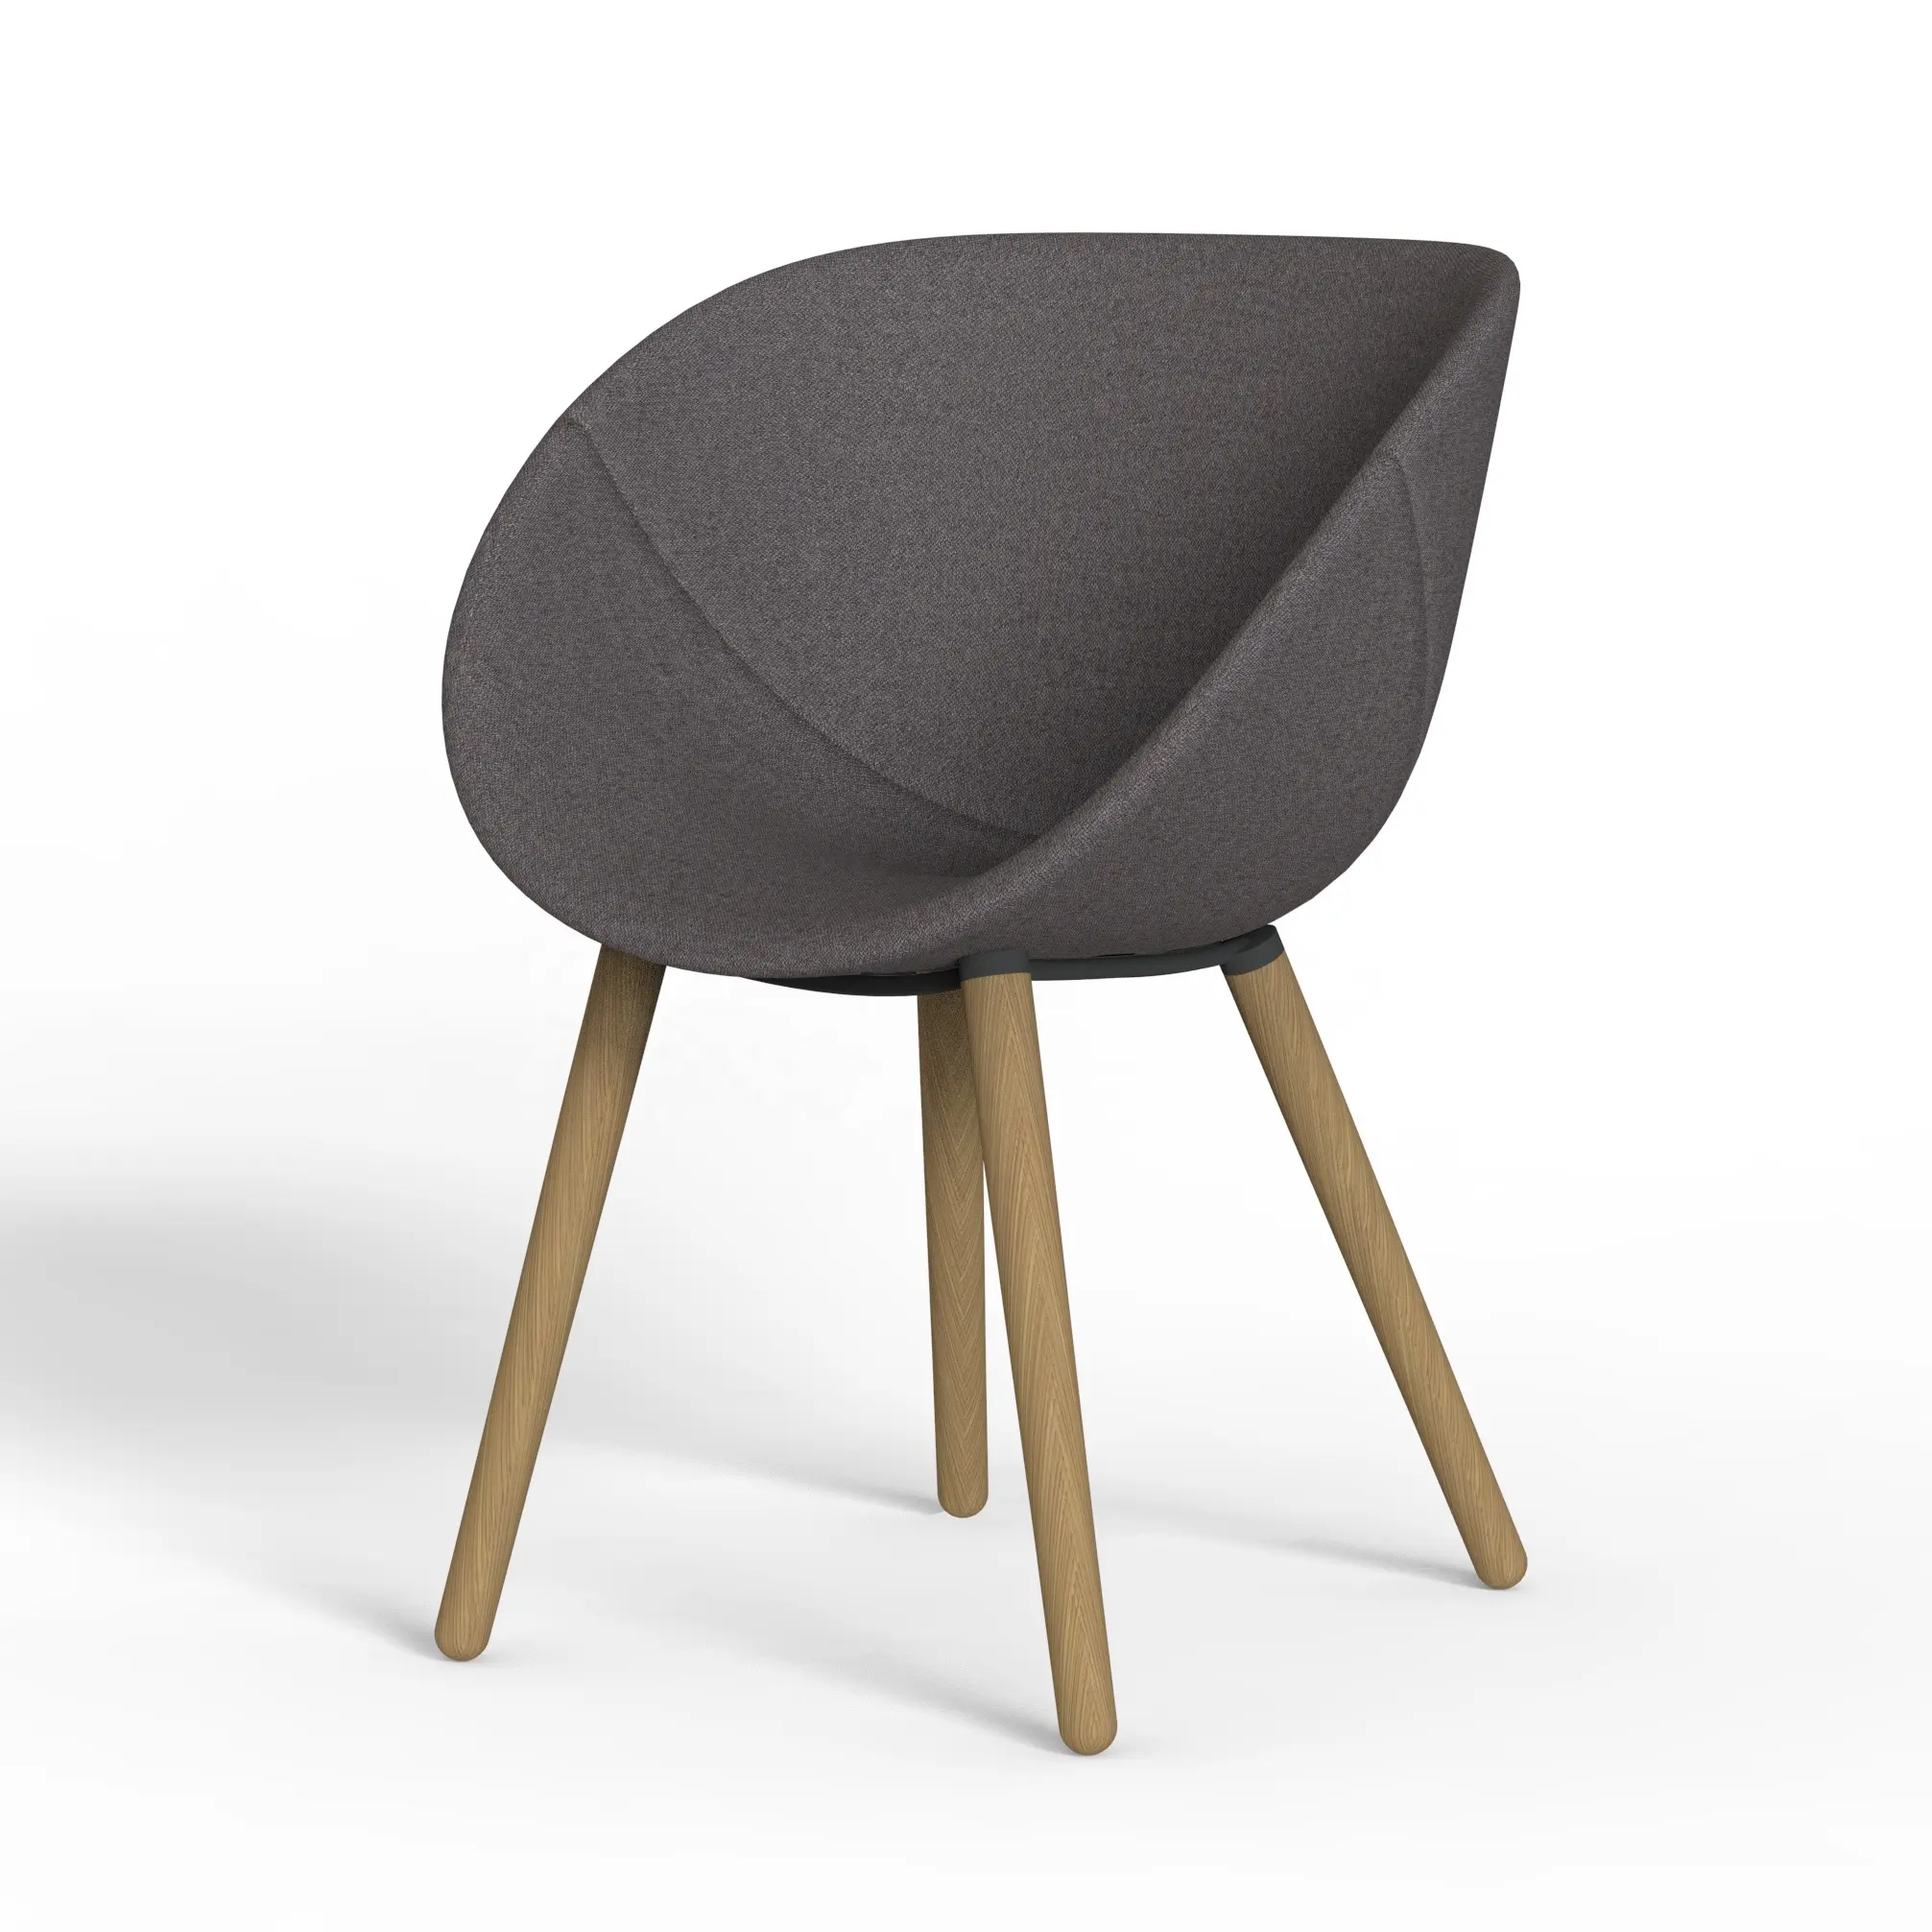 Ginkgo Chair Hotsale Nordic True Stylish Modern Designer Chair Dining Restaurant Office Molded Foam Office Meeting Chair